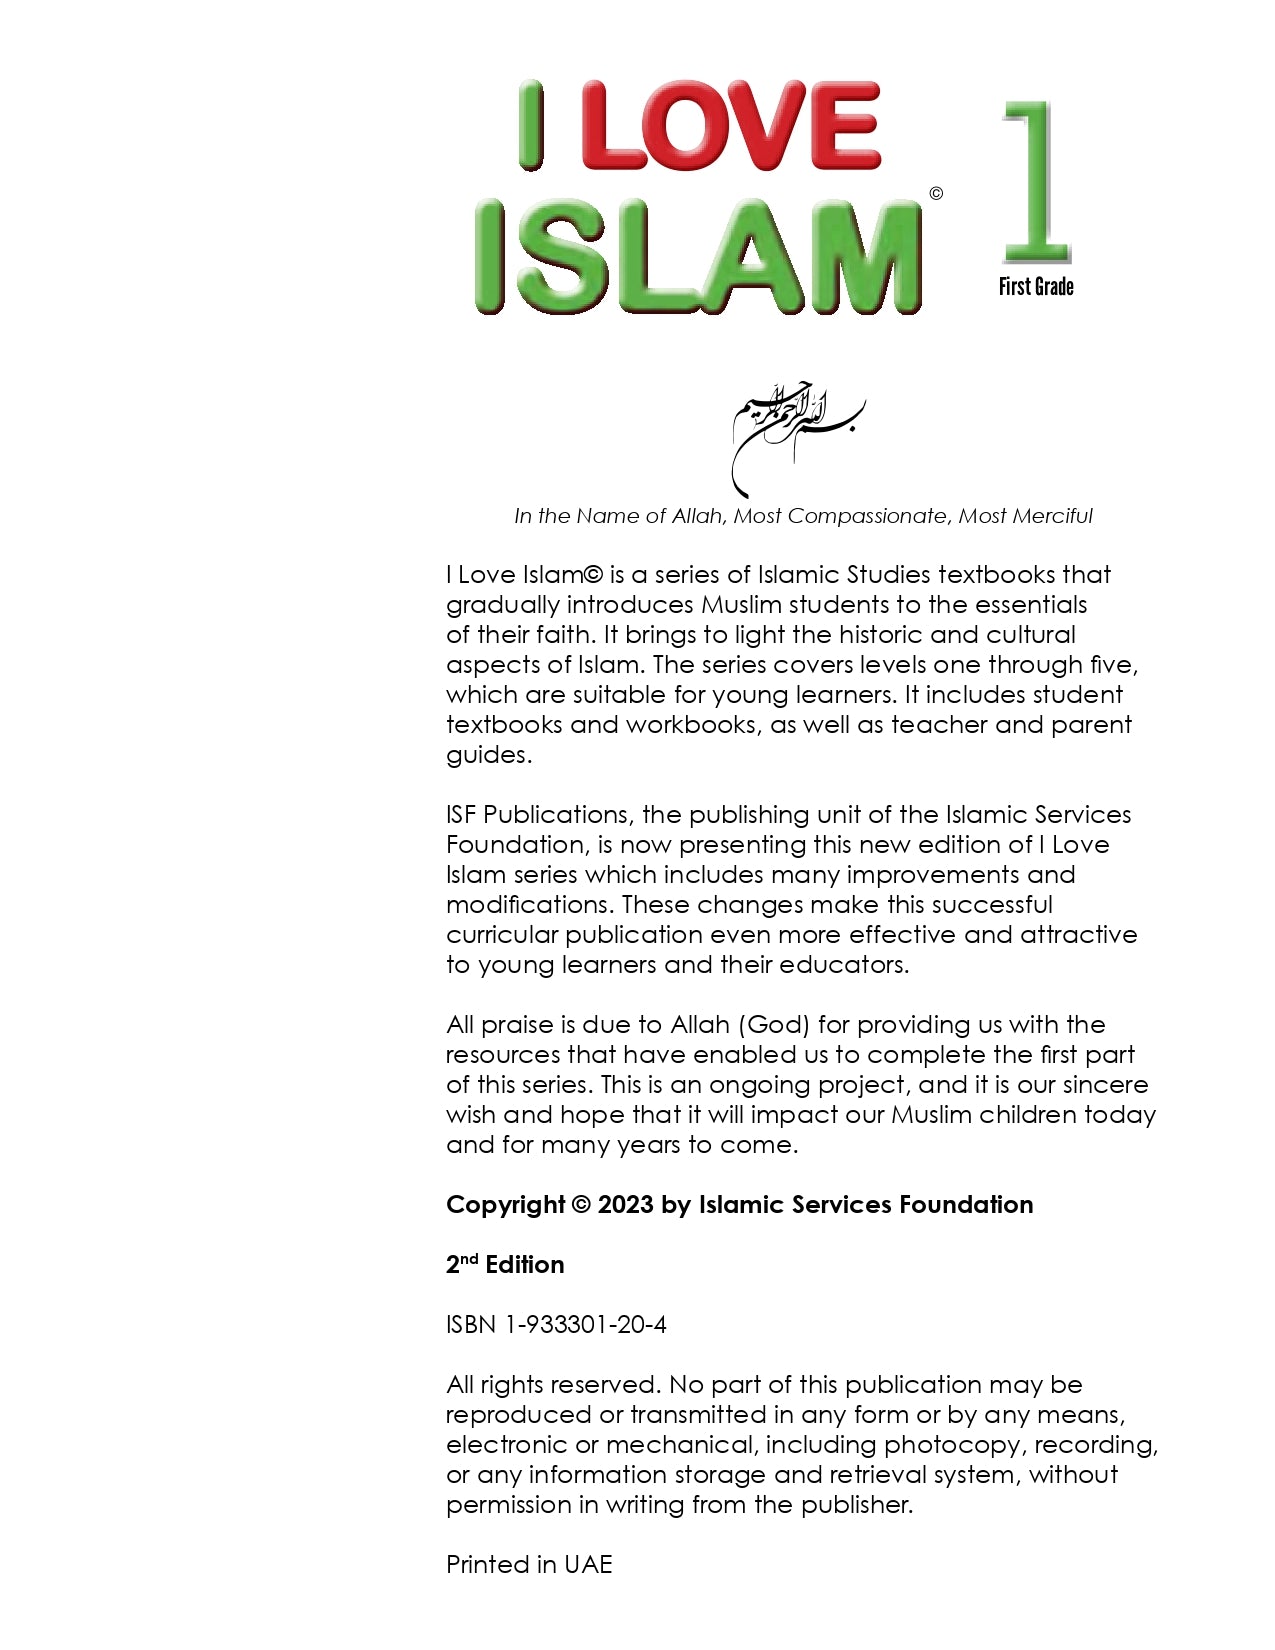 I Love Islam Textbook Level 1 (New Edition)